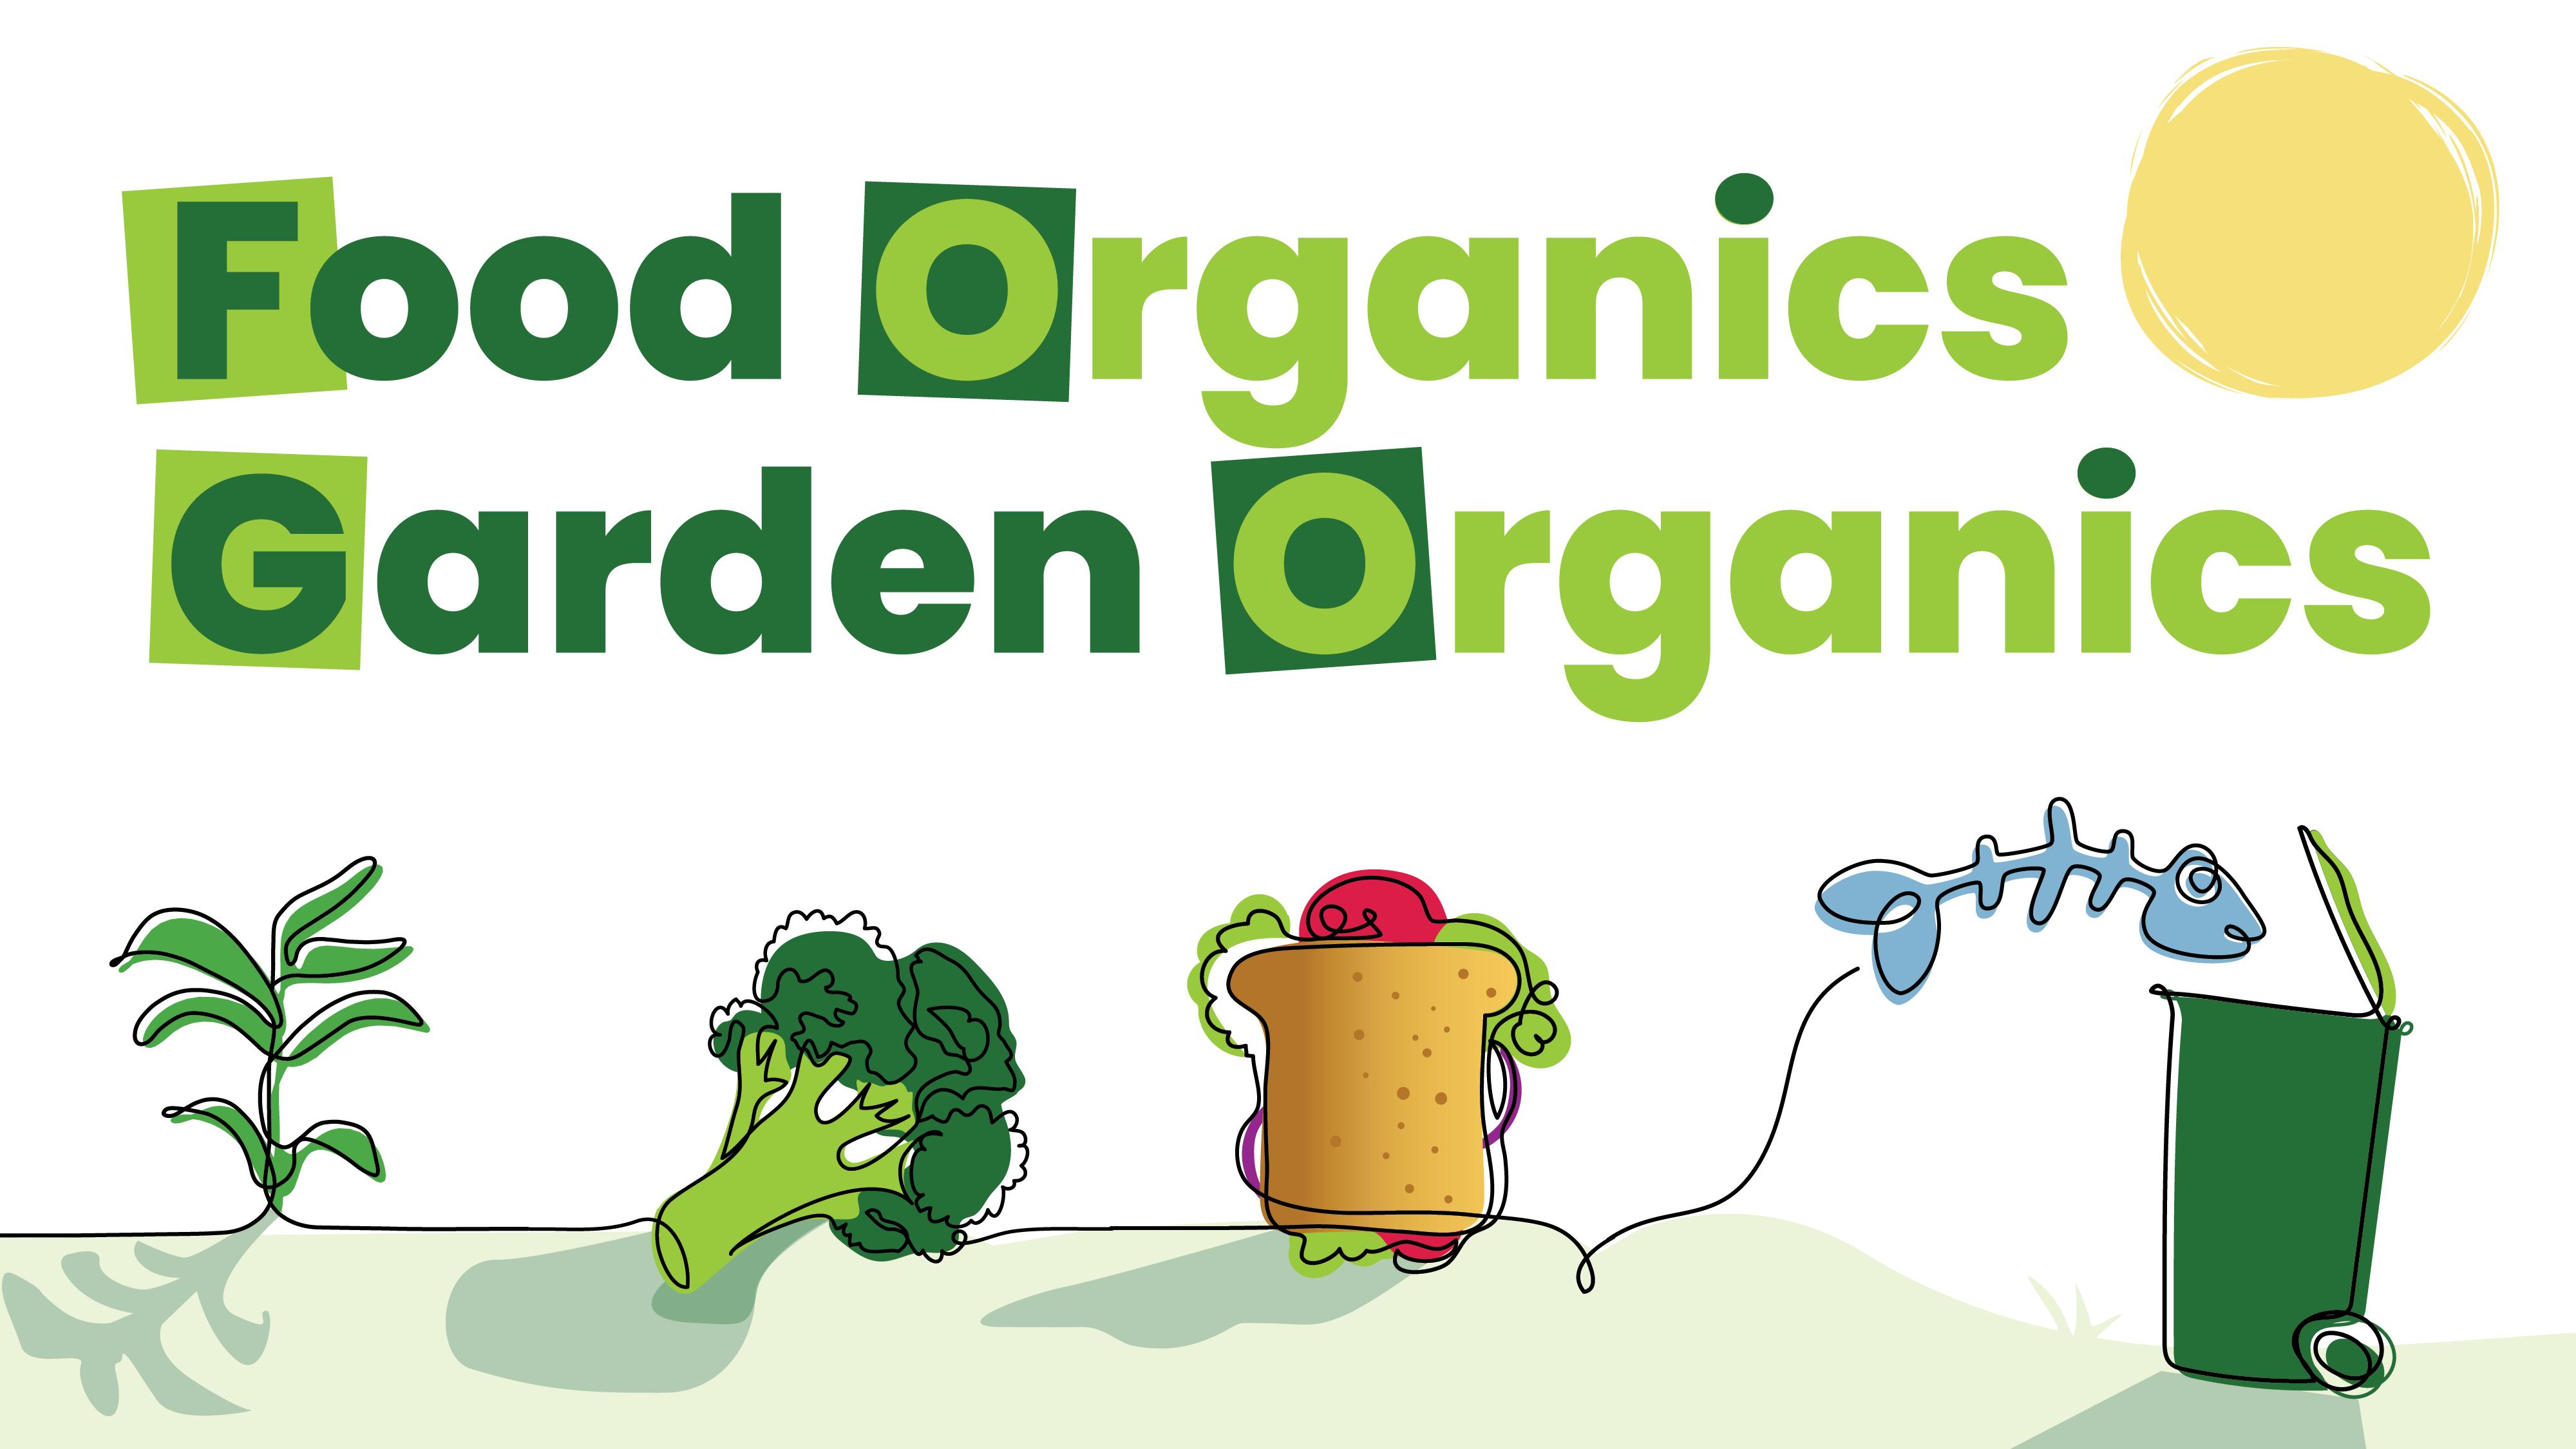 Food Organics Garden Organics